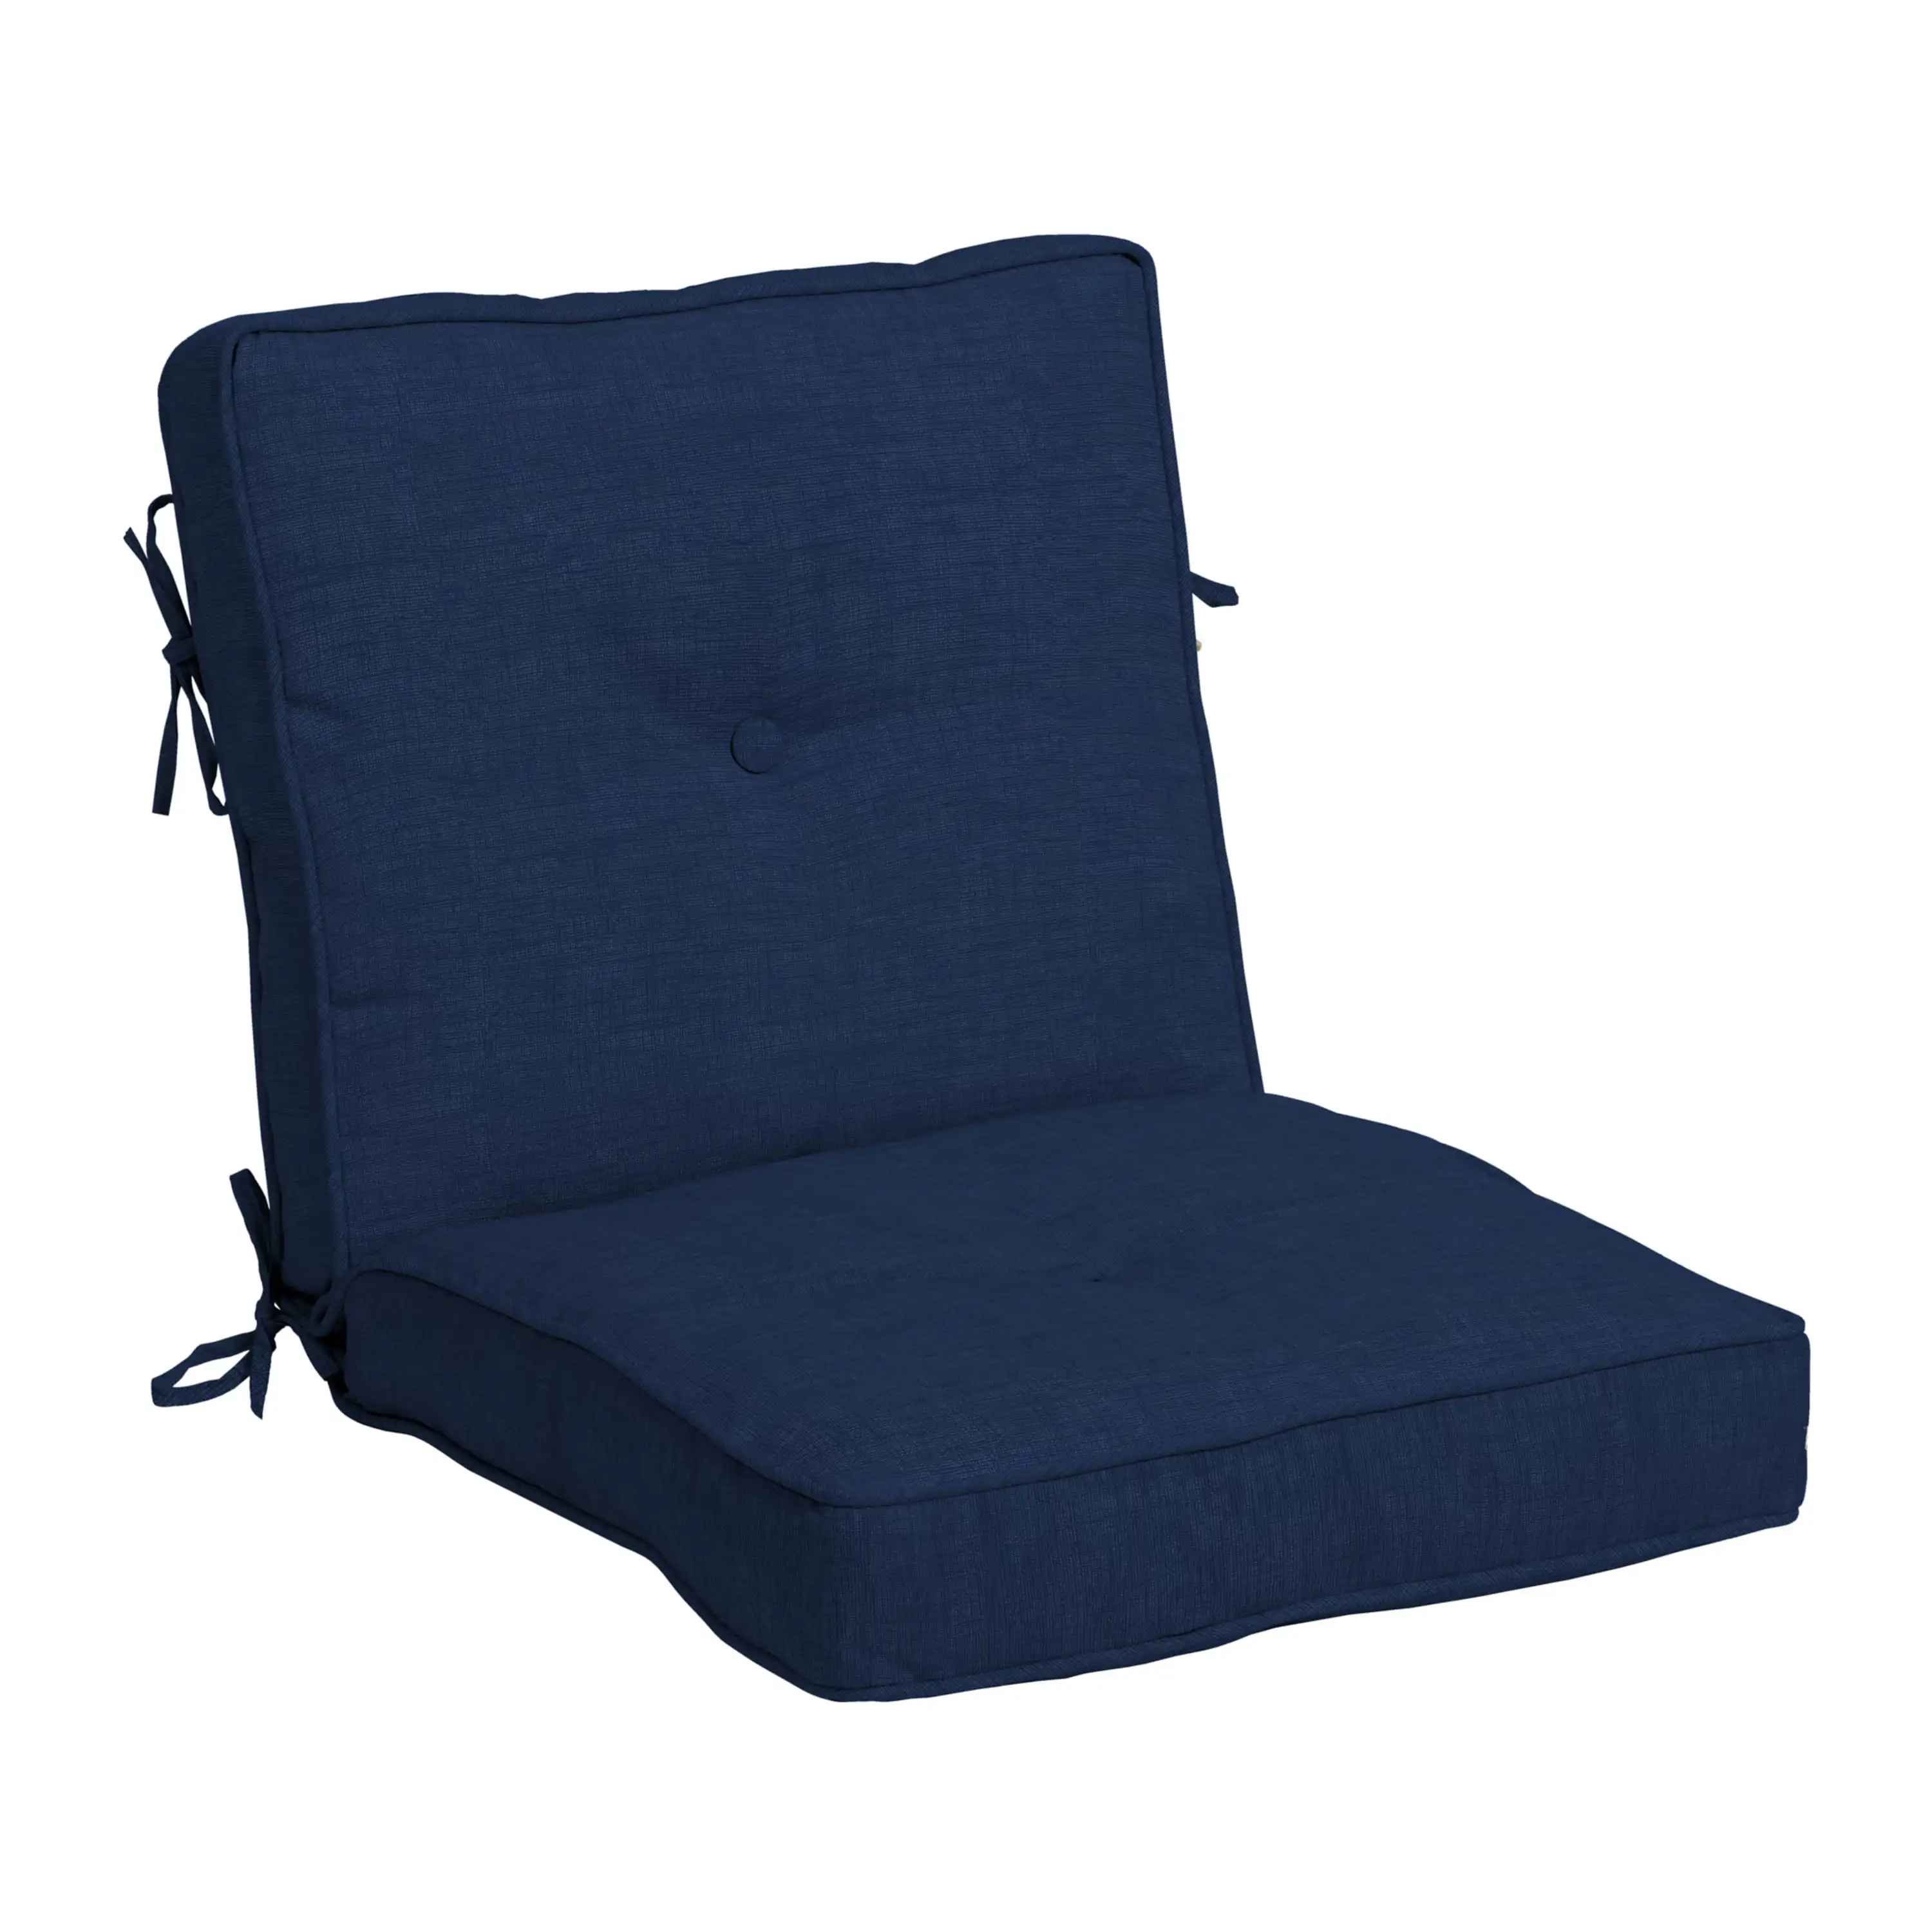 

Arden Selections PolyFill Outdoor Chair Cushion 20 x 21, Sapphire Blue Leala